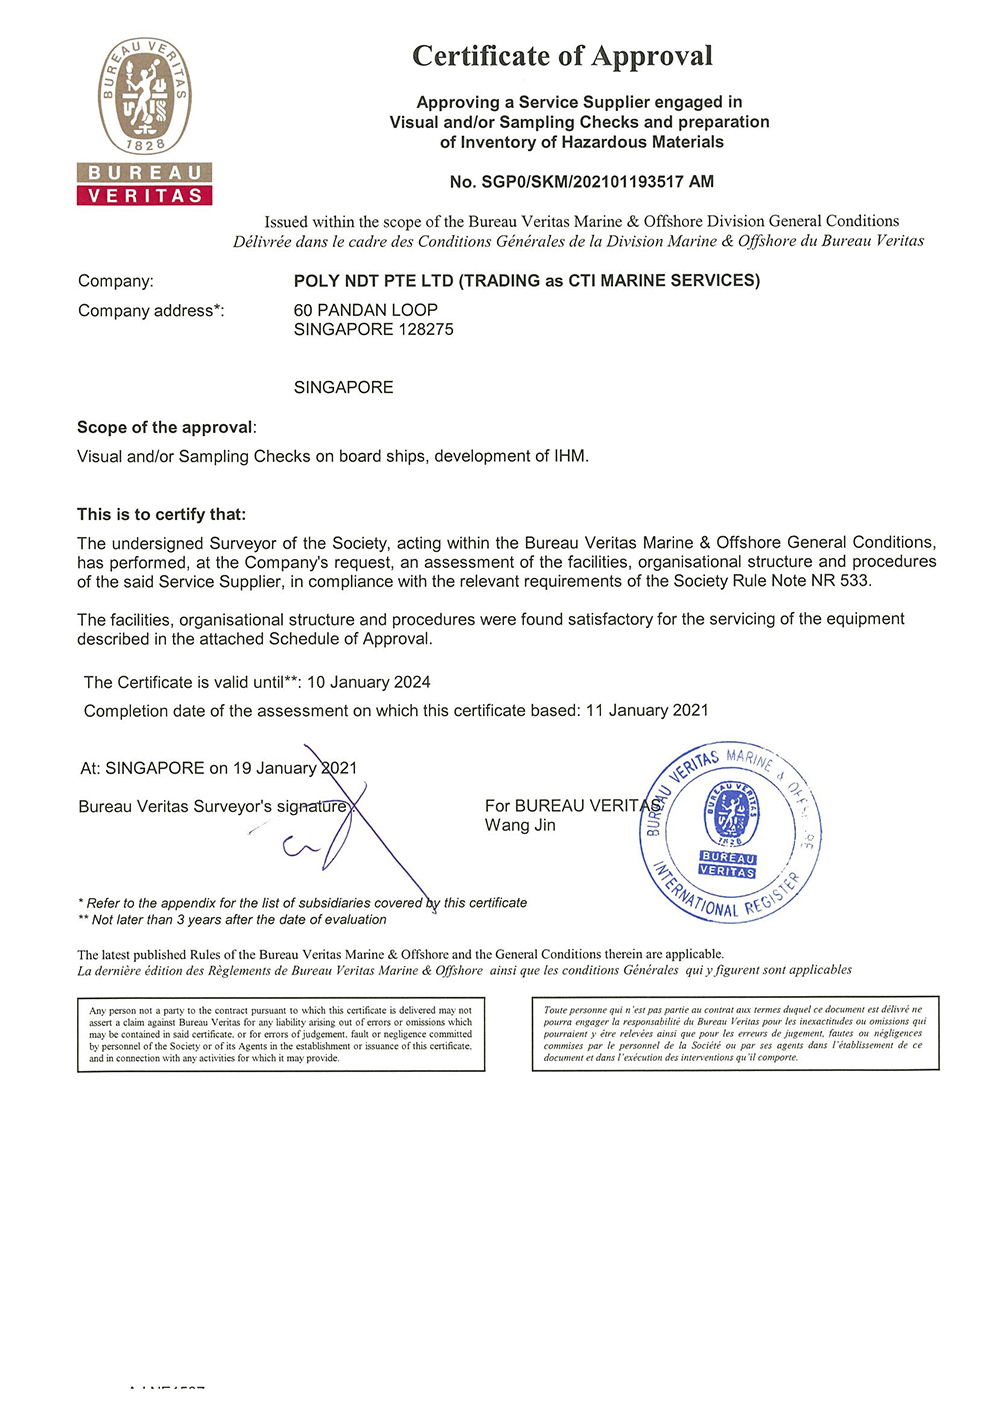 BV Certificate-2021